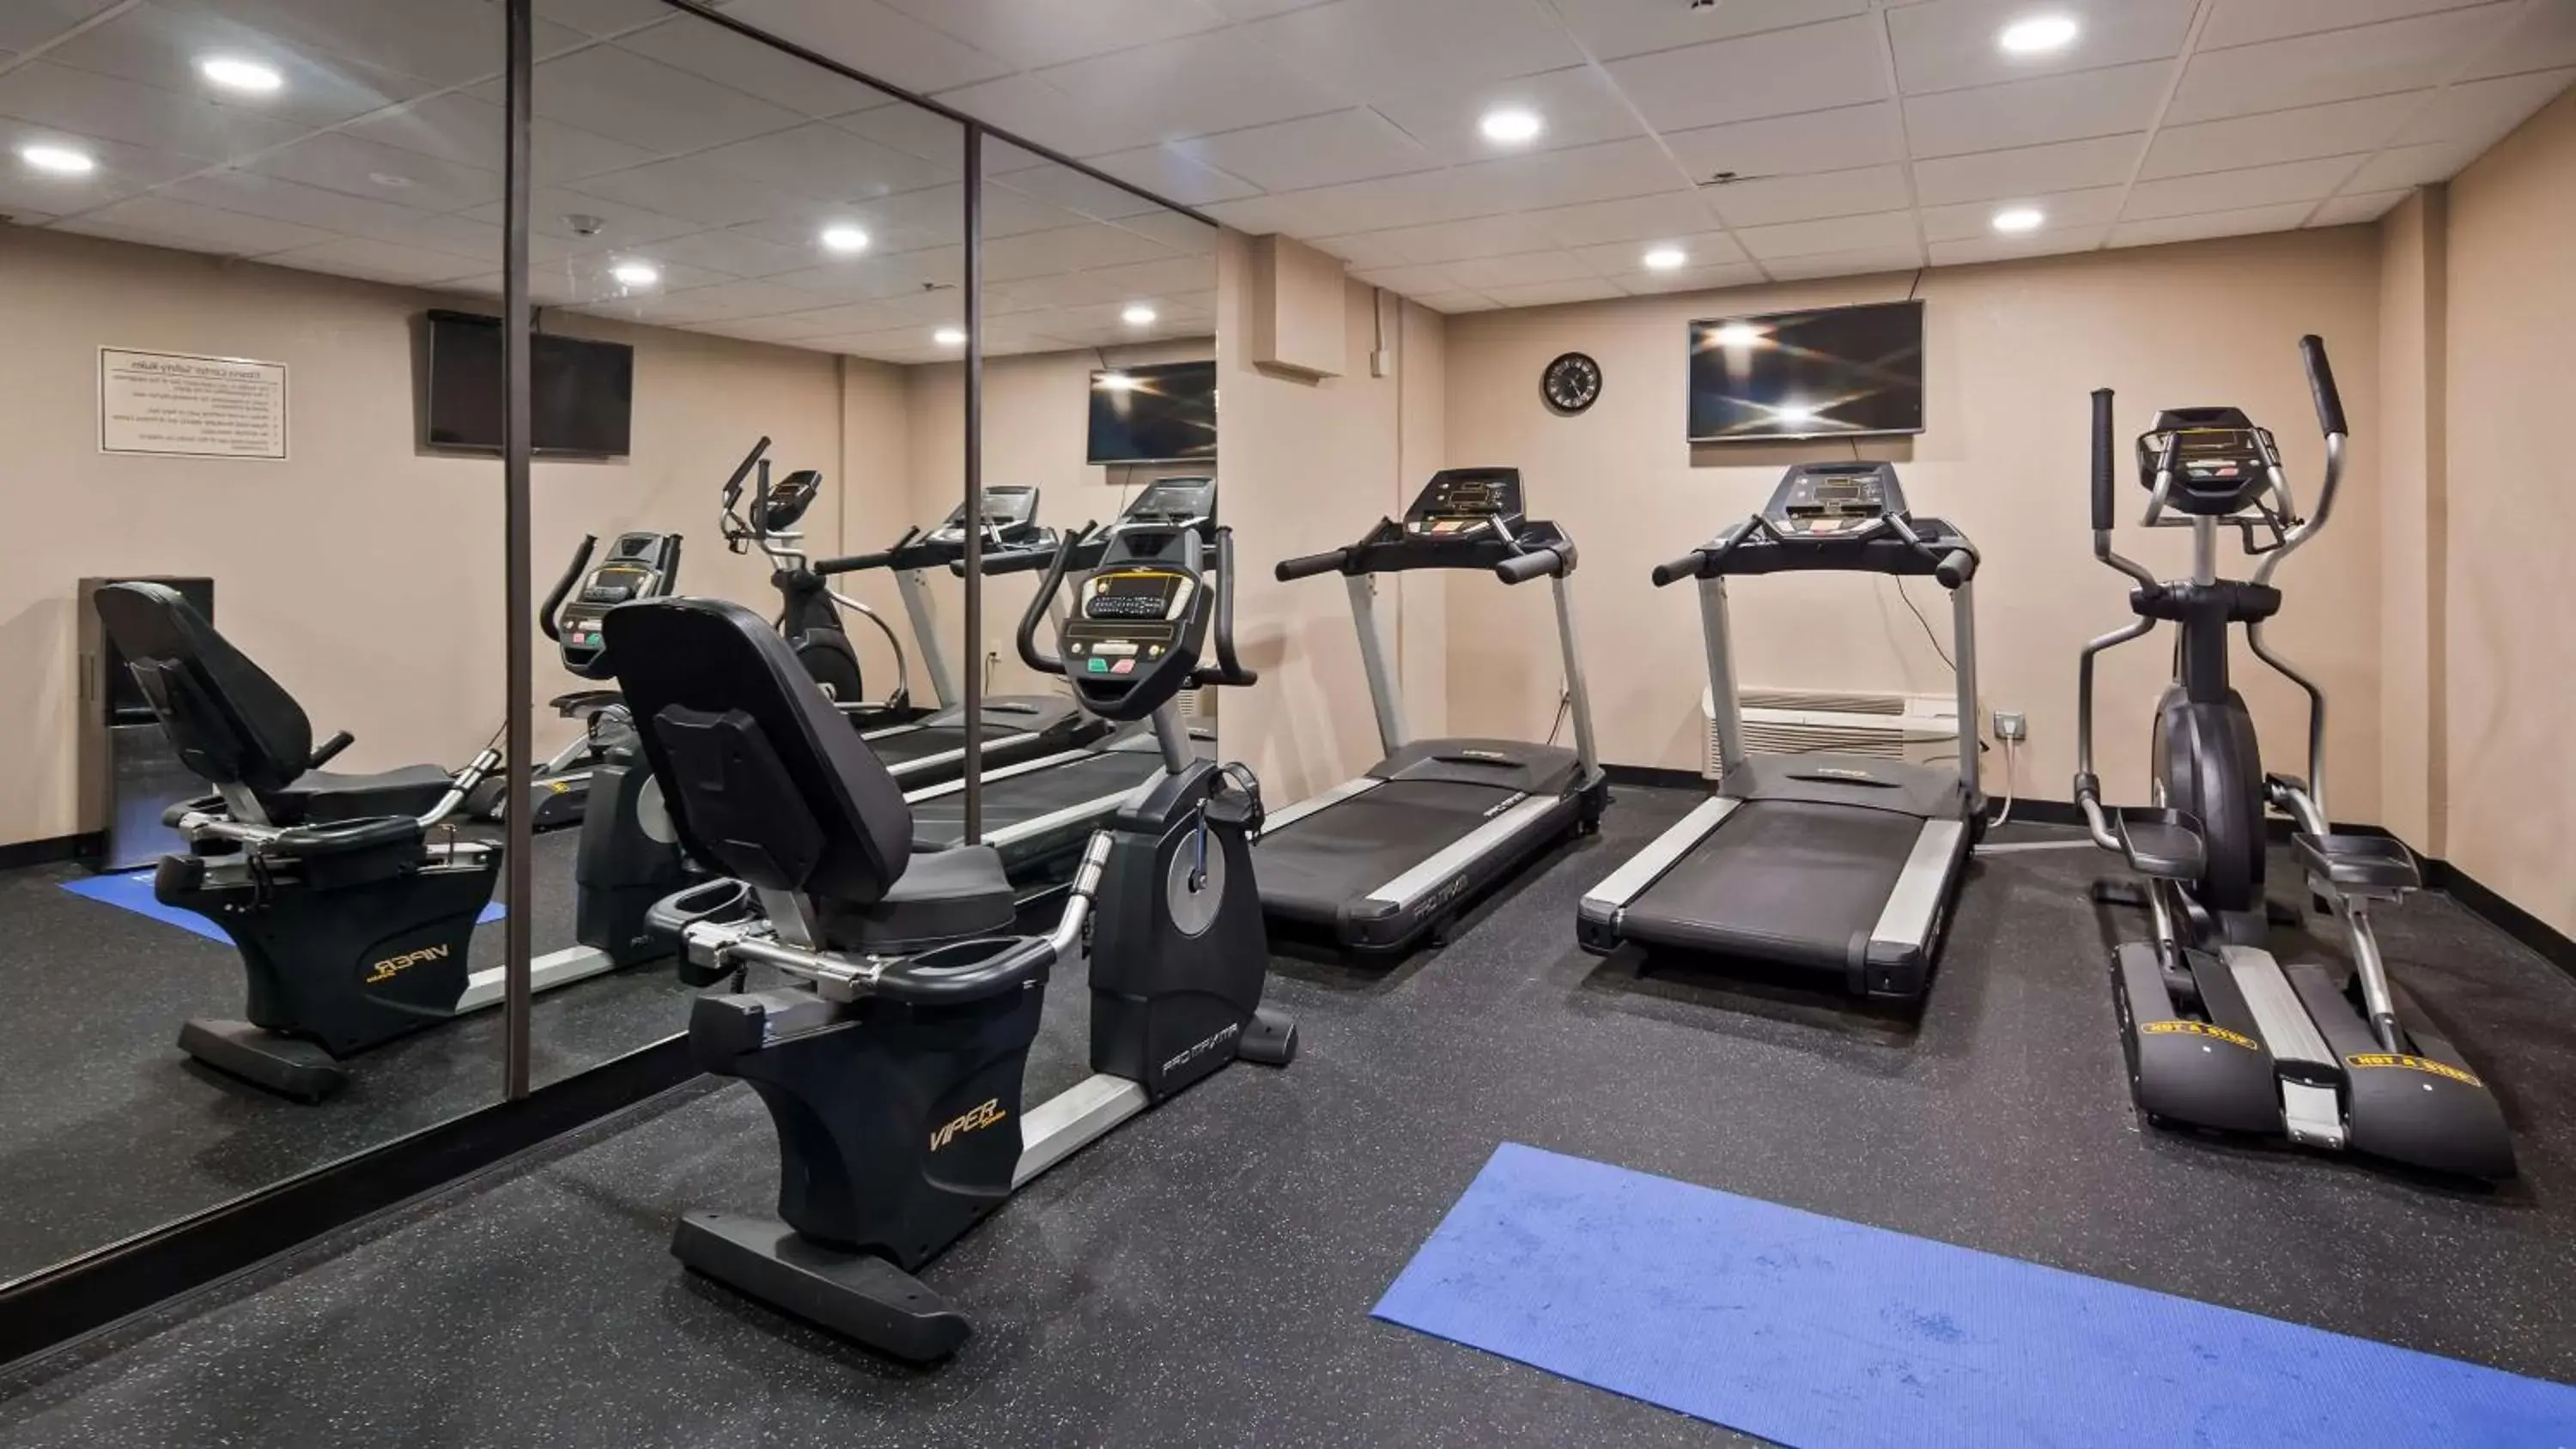 Fitness centre/facilities, Fitness Center/Facilities in Best Western Plus Sunrise Inn